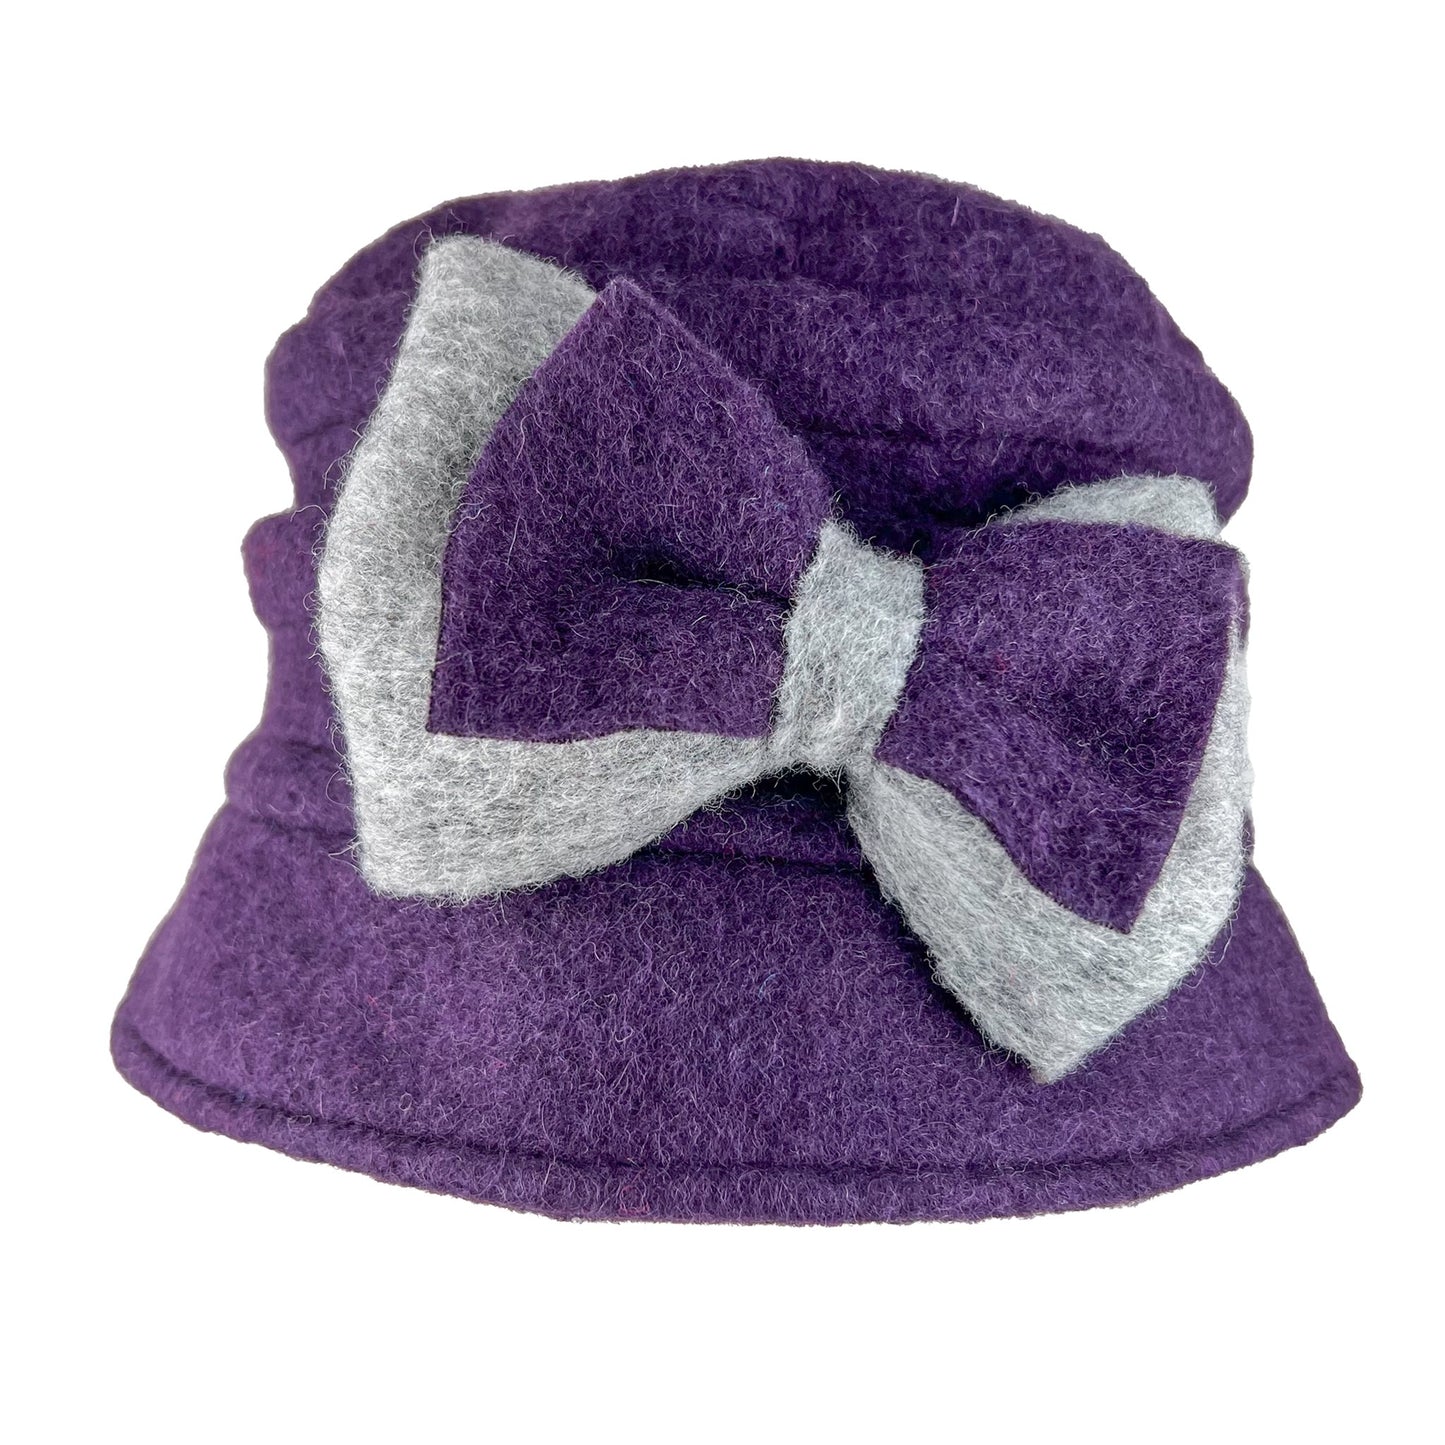 Elisabet - wool hat - purple/grey - nammi.isÓfeigur